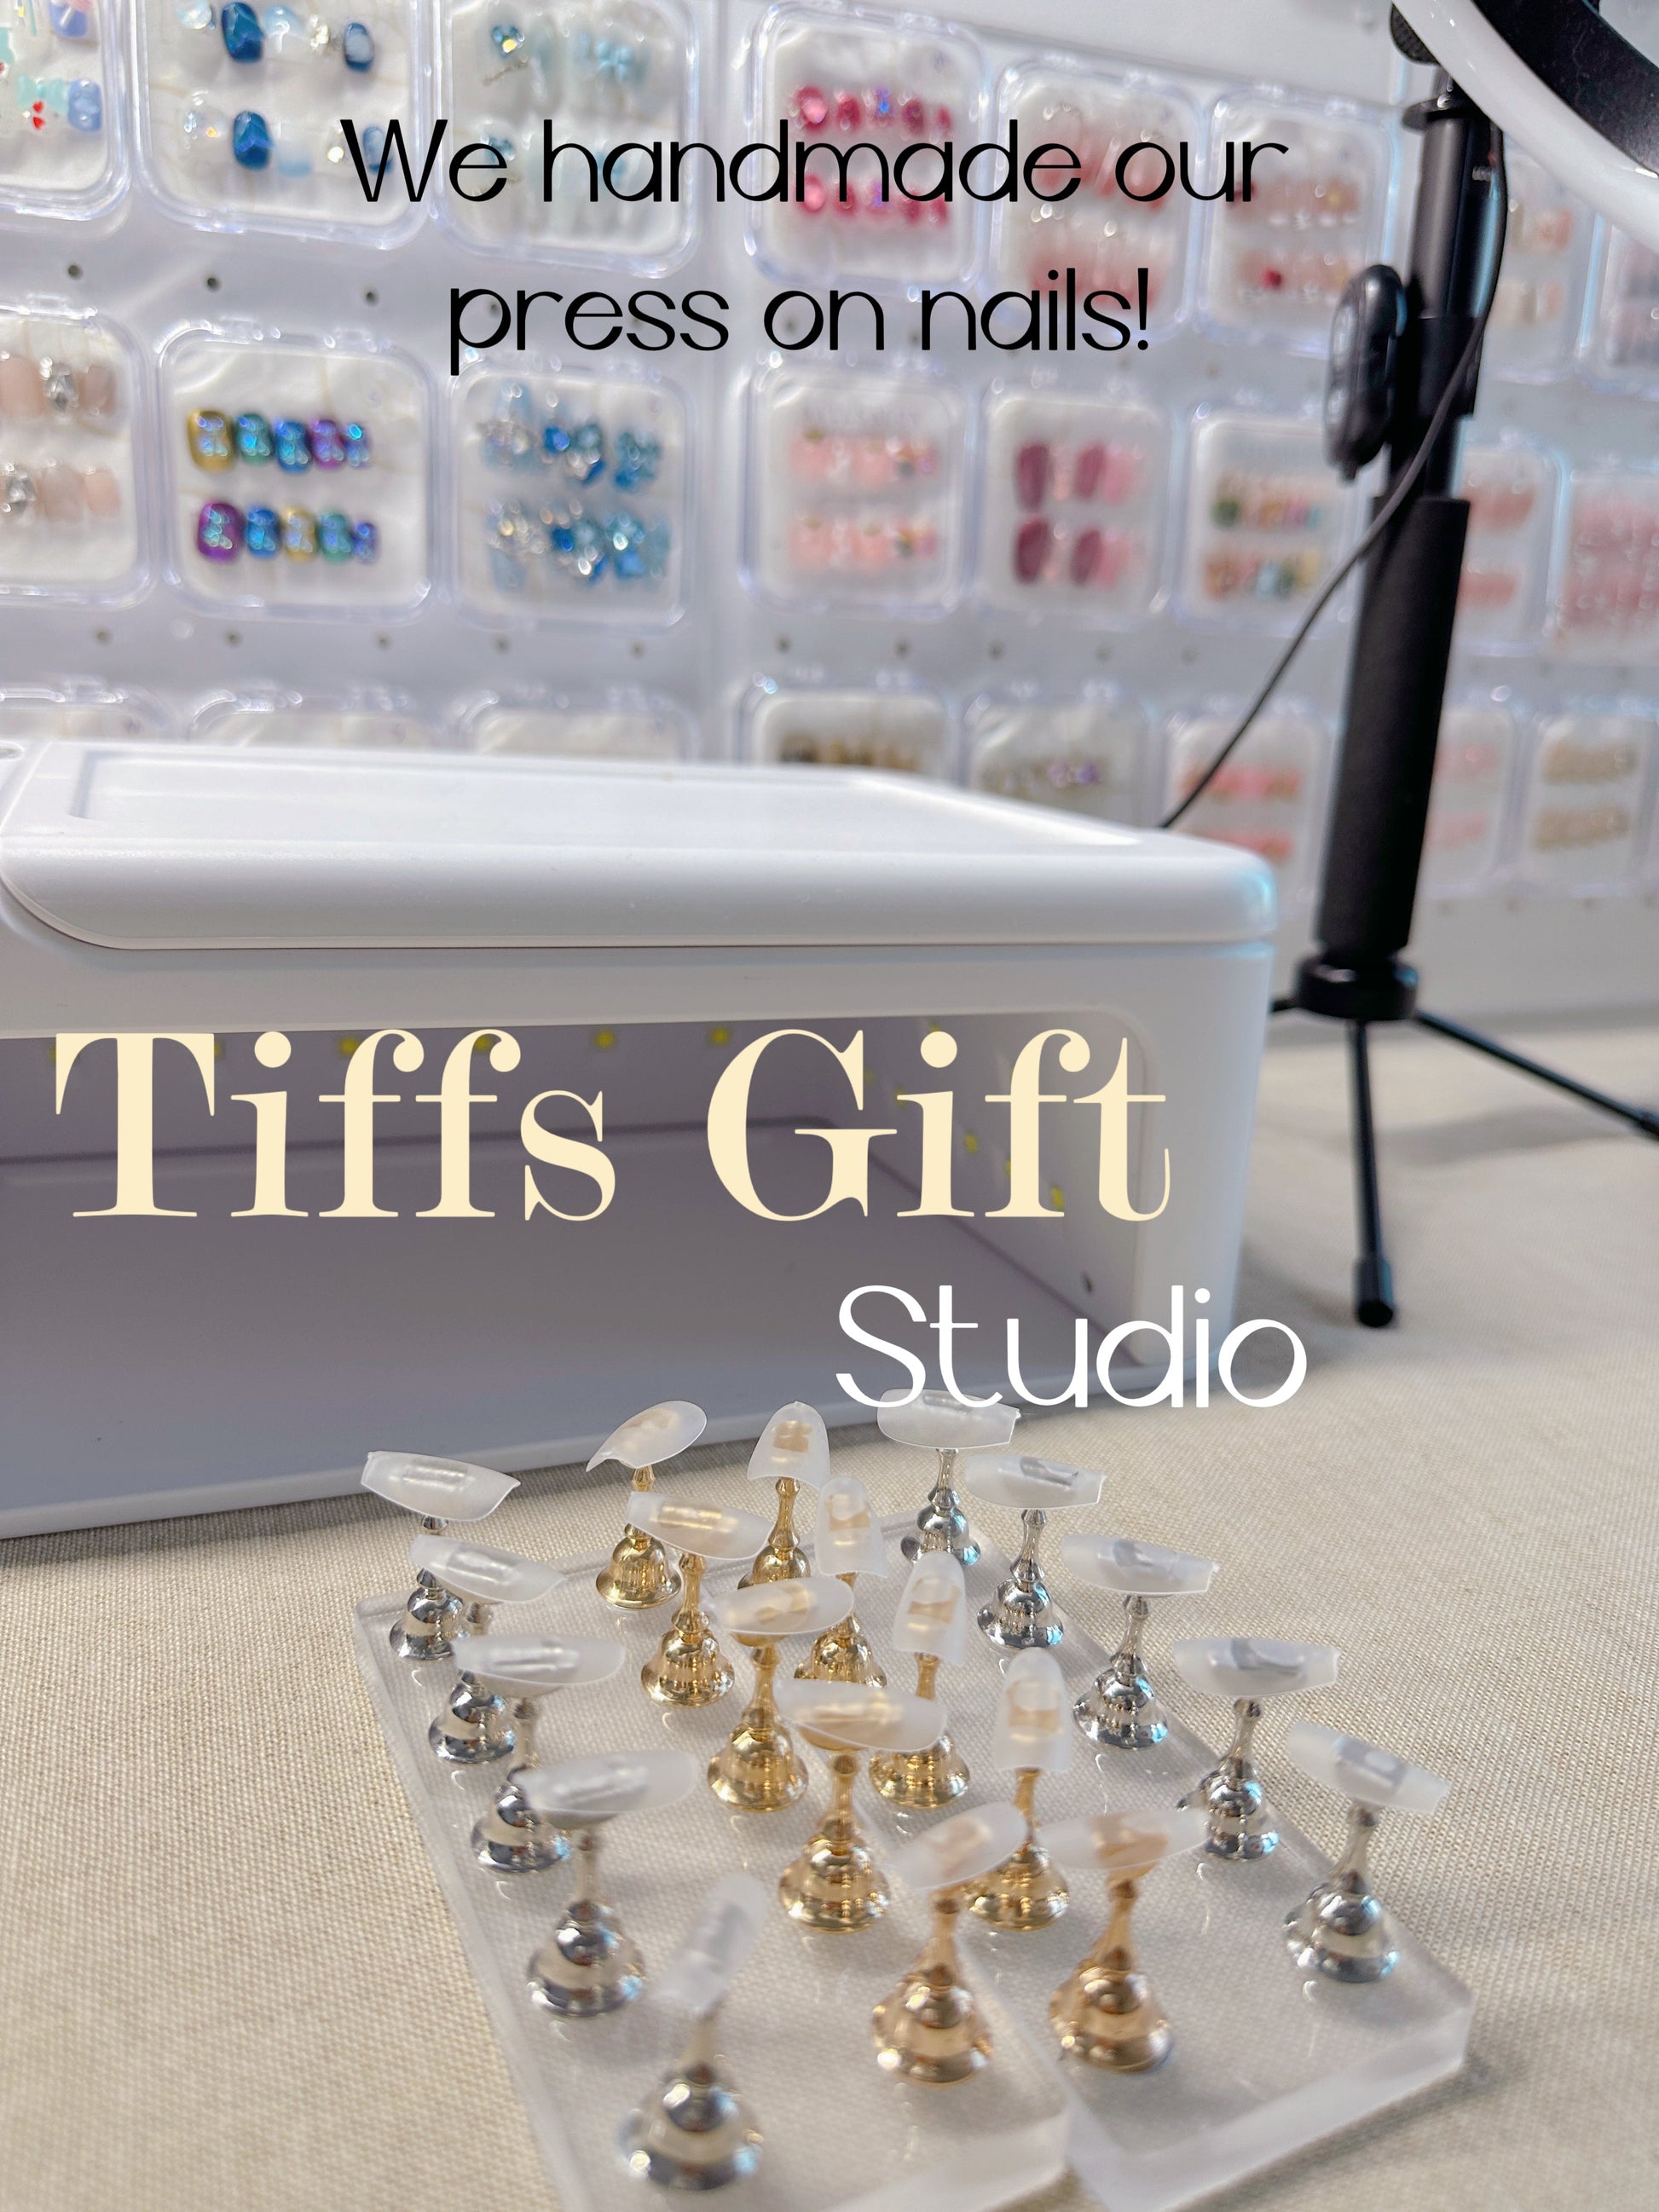 Custom design press on nails (Special Order) - TiffsGift